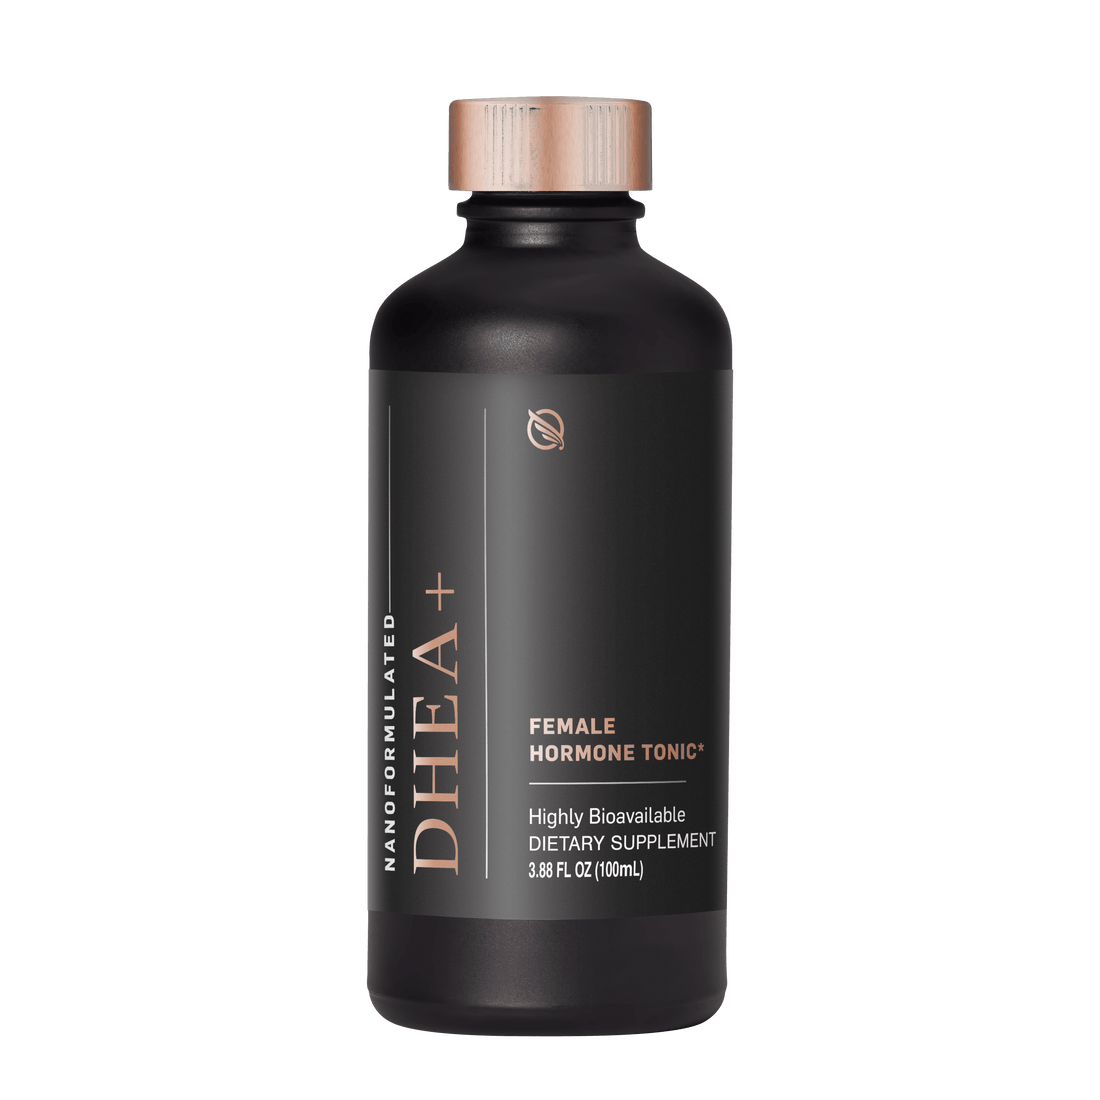 Image of Bonasana Health DHEA supplement container